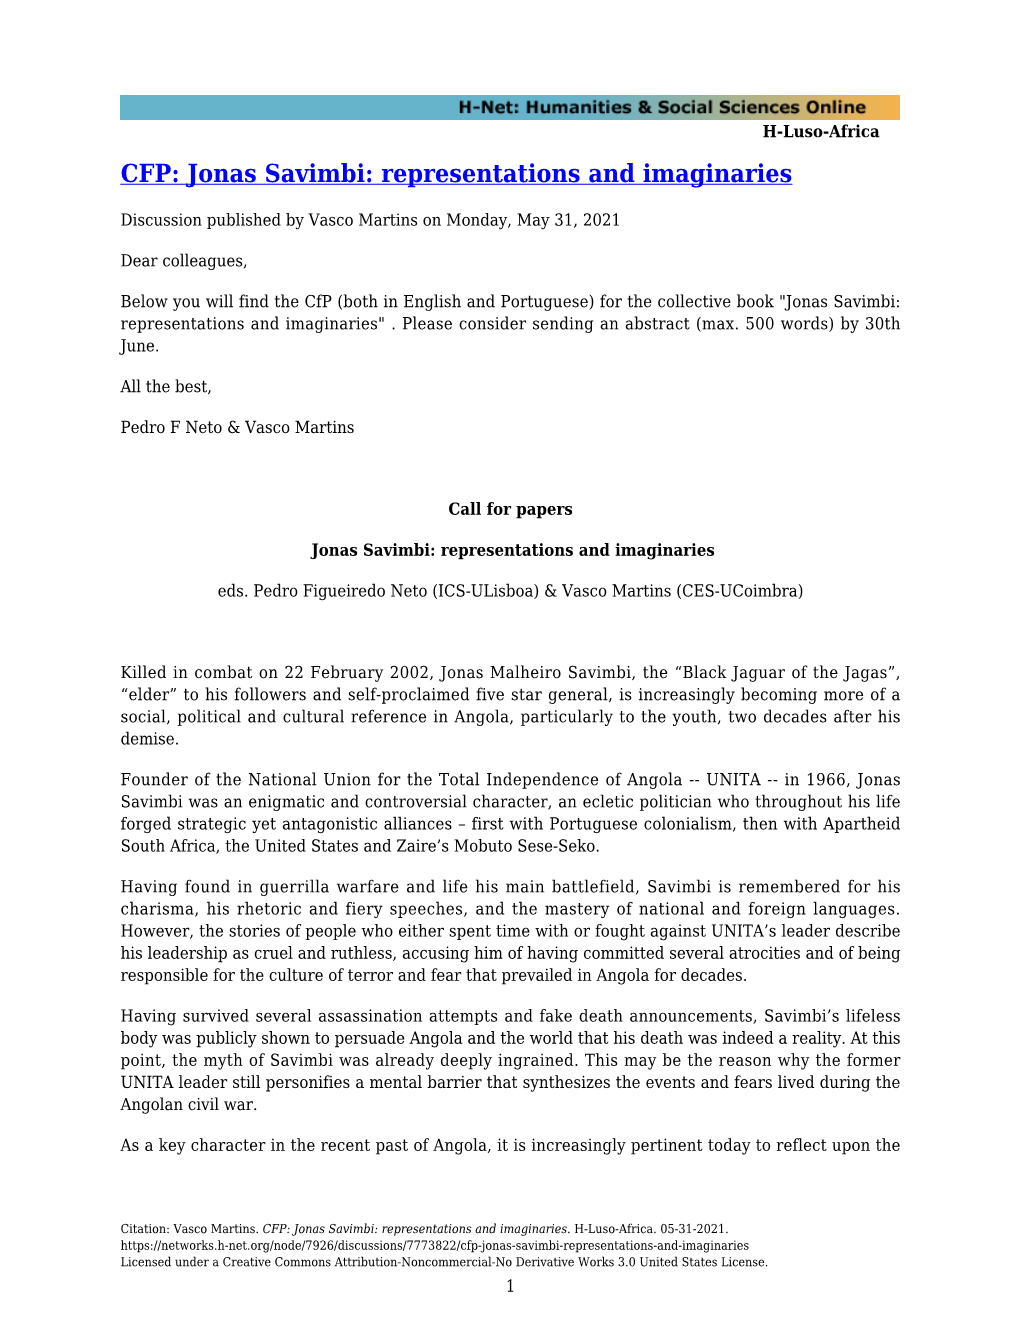 Jonas Savimbi: Representations and Imaginaries